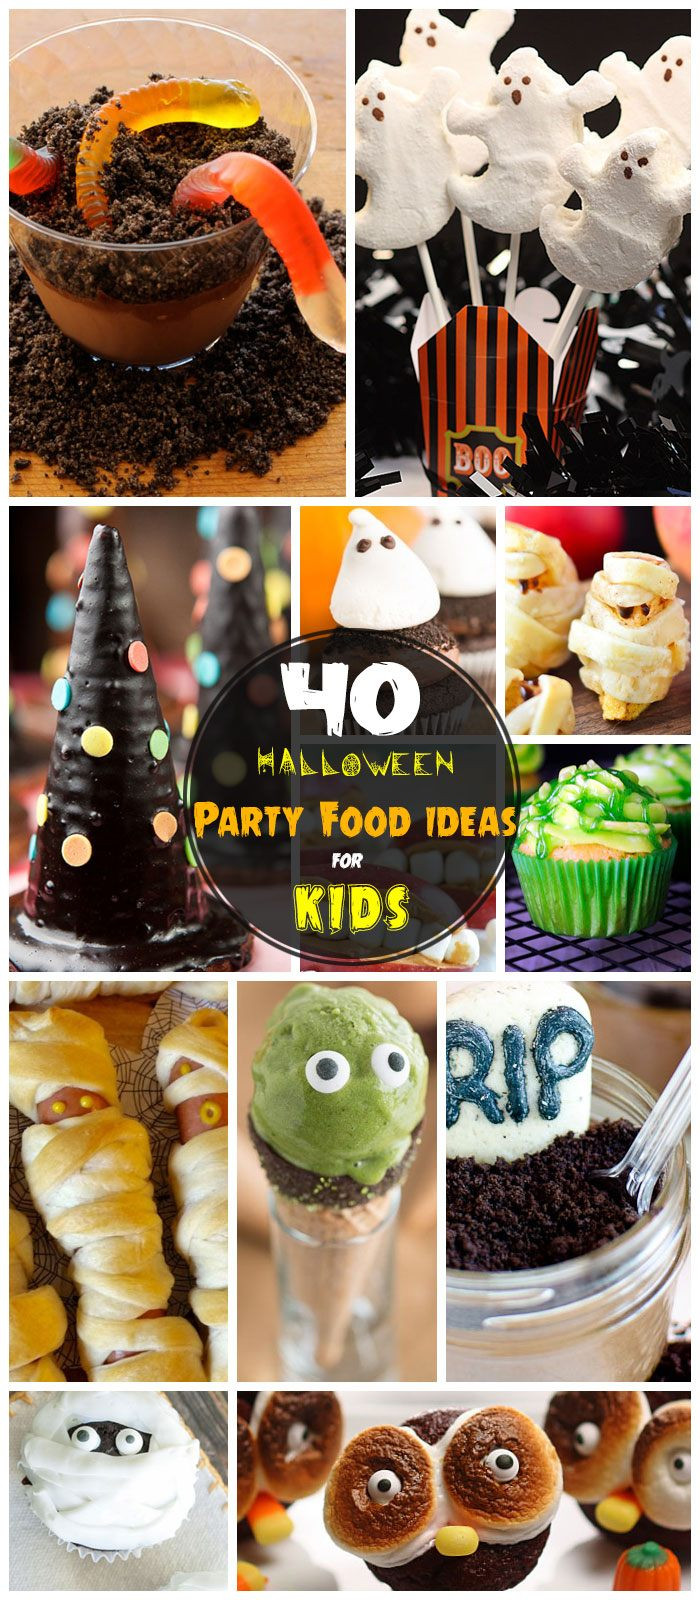 Halloween Party Treat Ideas
 40 Halloween Party Food Ideas for Kids